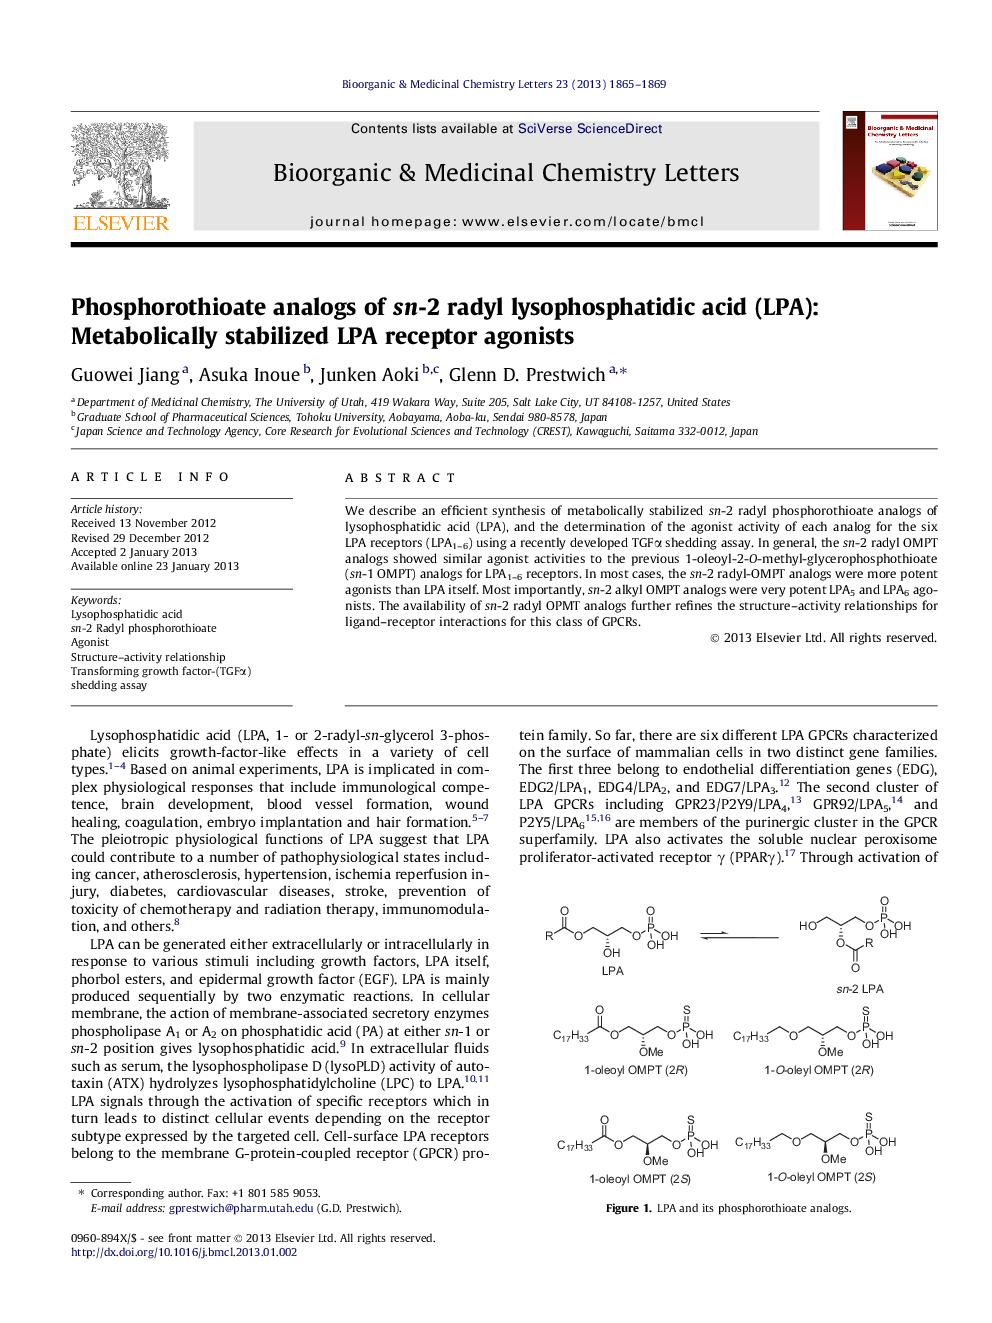 Phosphorothioate analogs of sn-2 radyl lysophosphatidic acid (LPA): Metabolically stabilized LPA receptor agonists